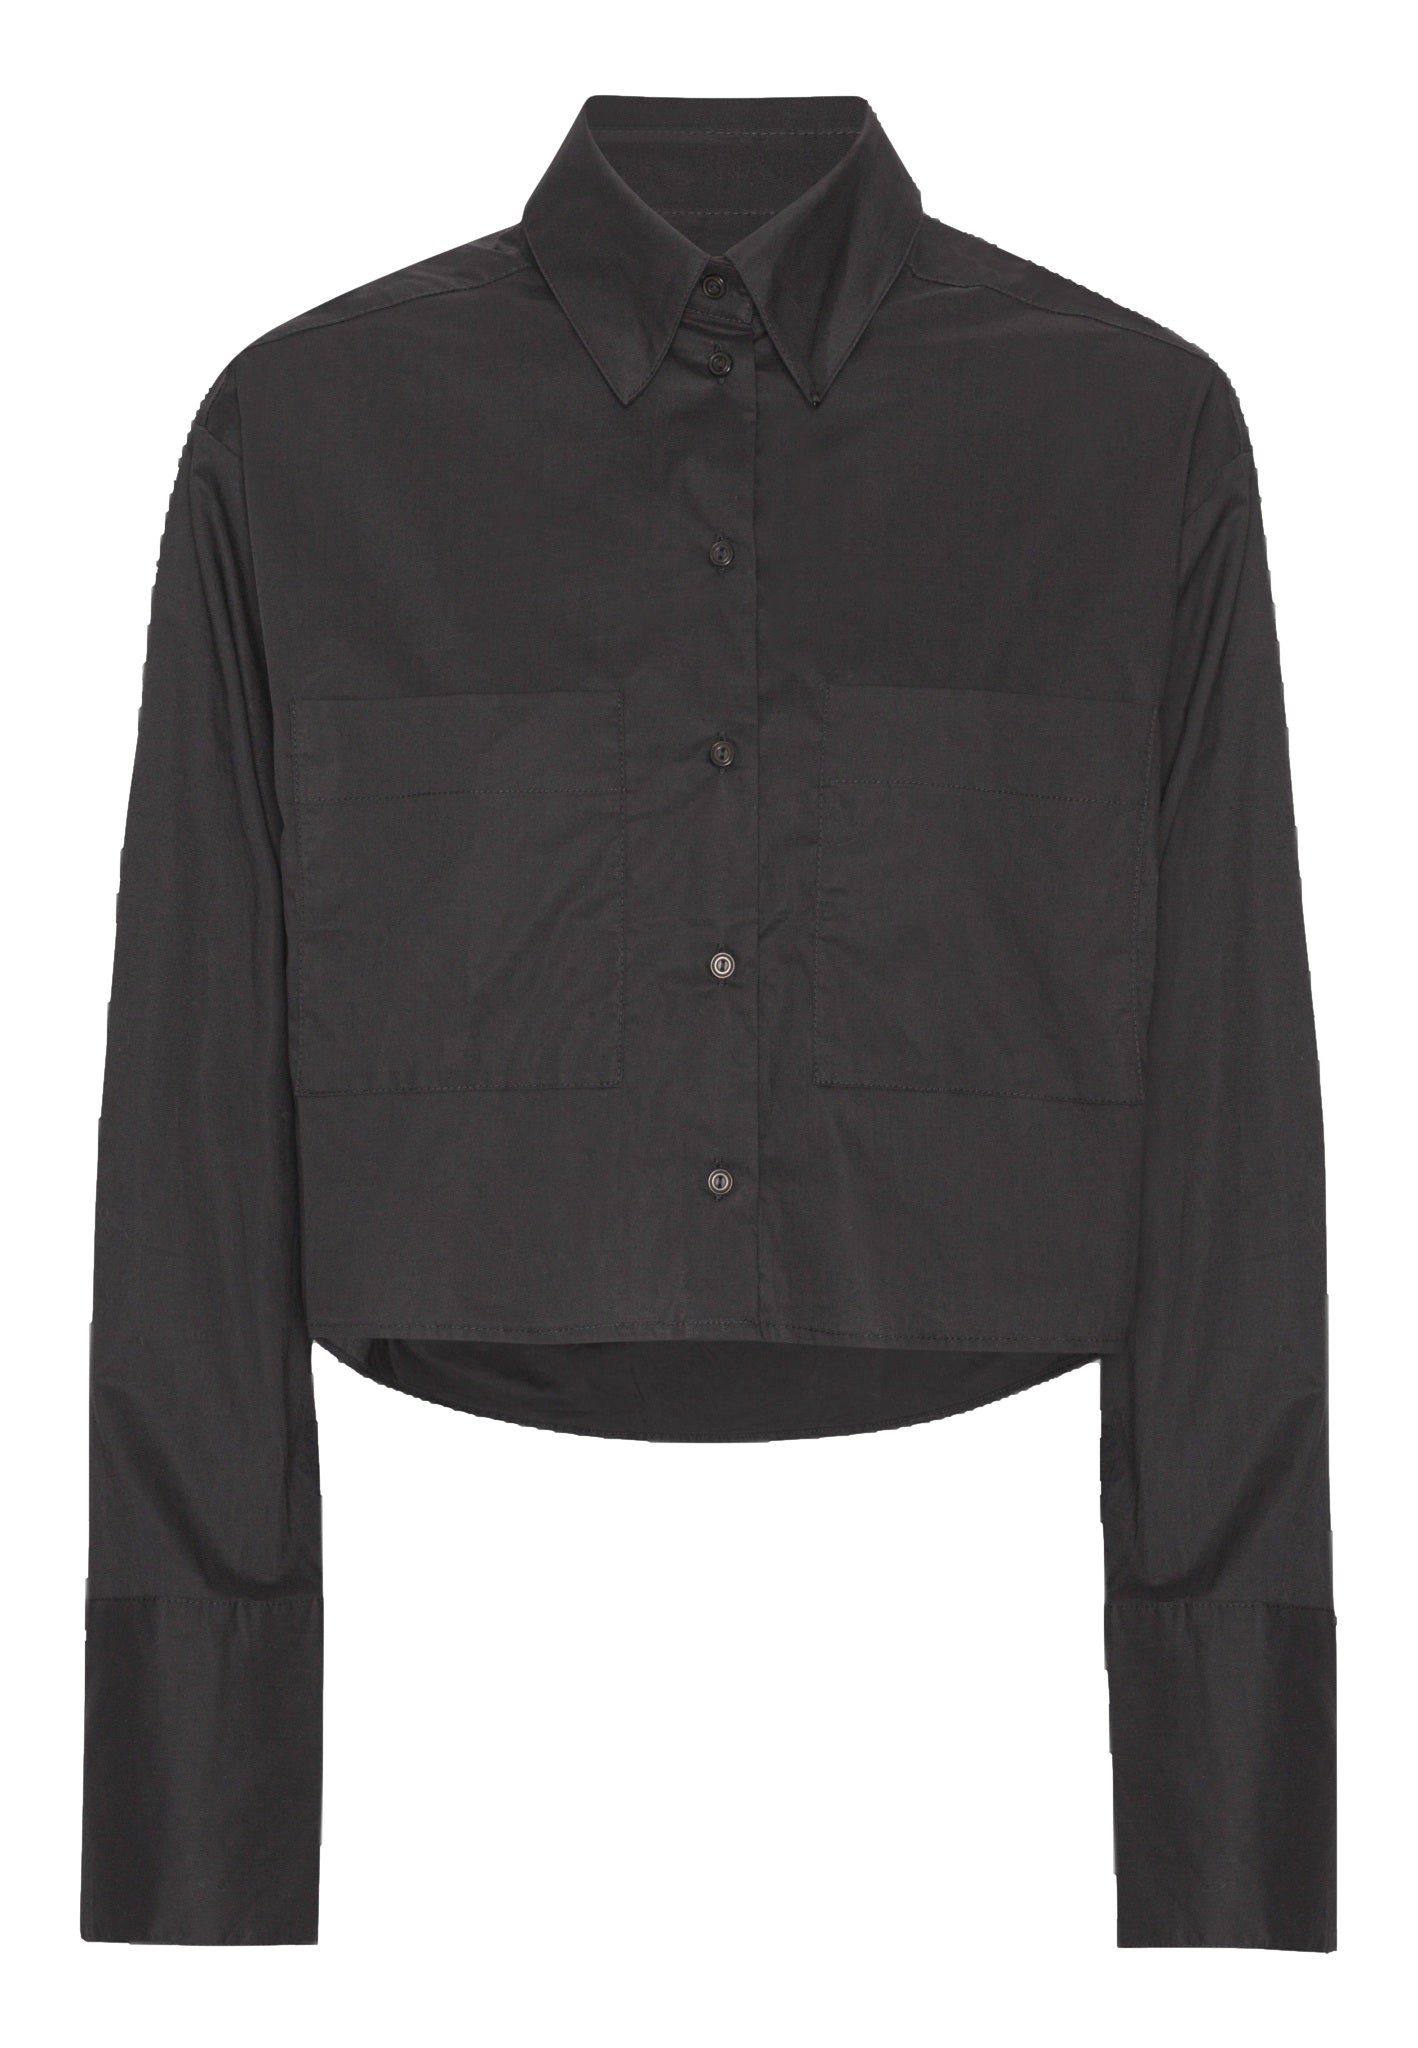 Herskind Samuel Shirt In Black